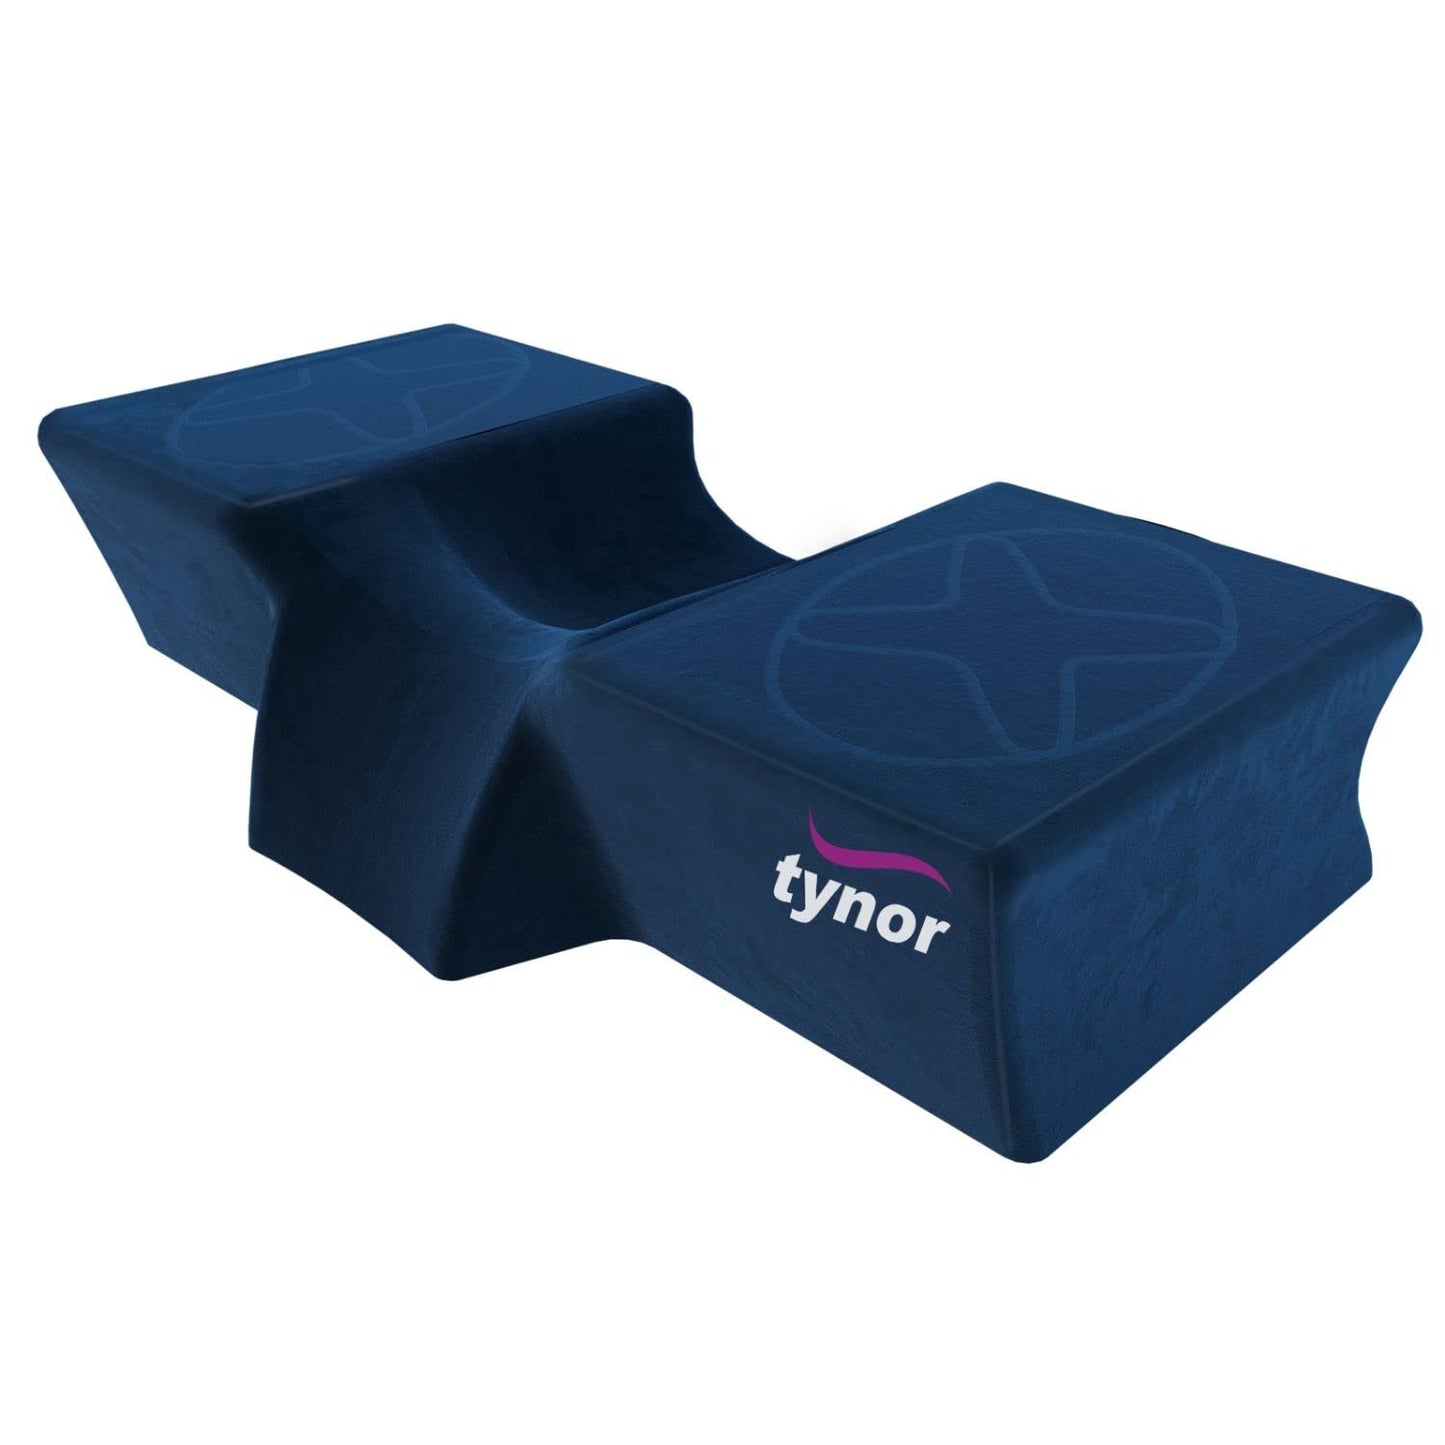 Tynor Anatomic Pillow Urbane